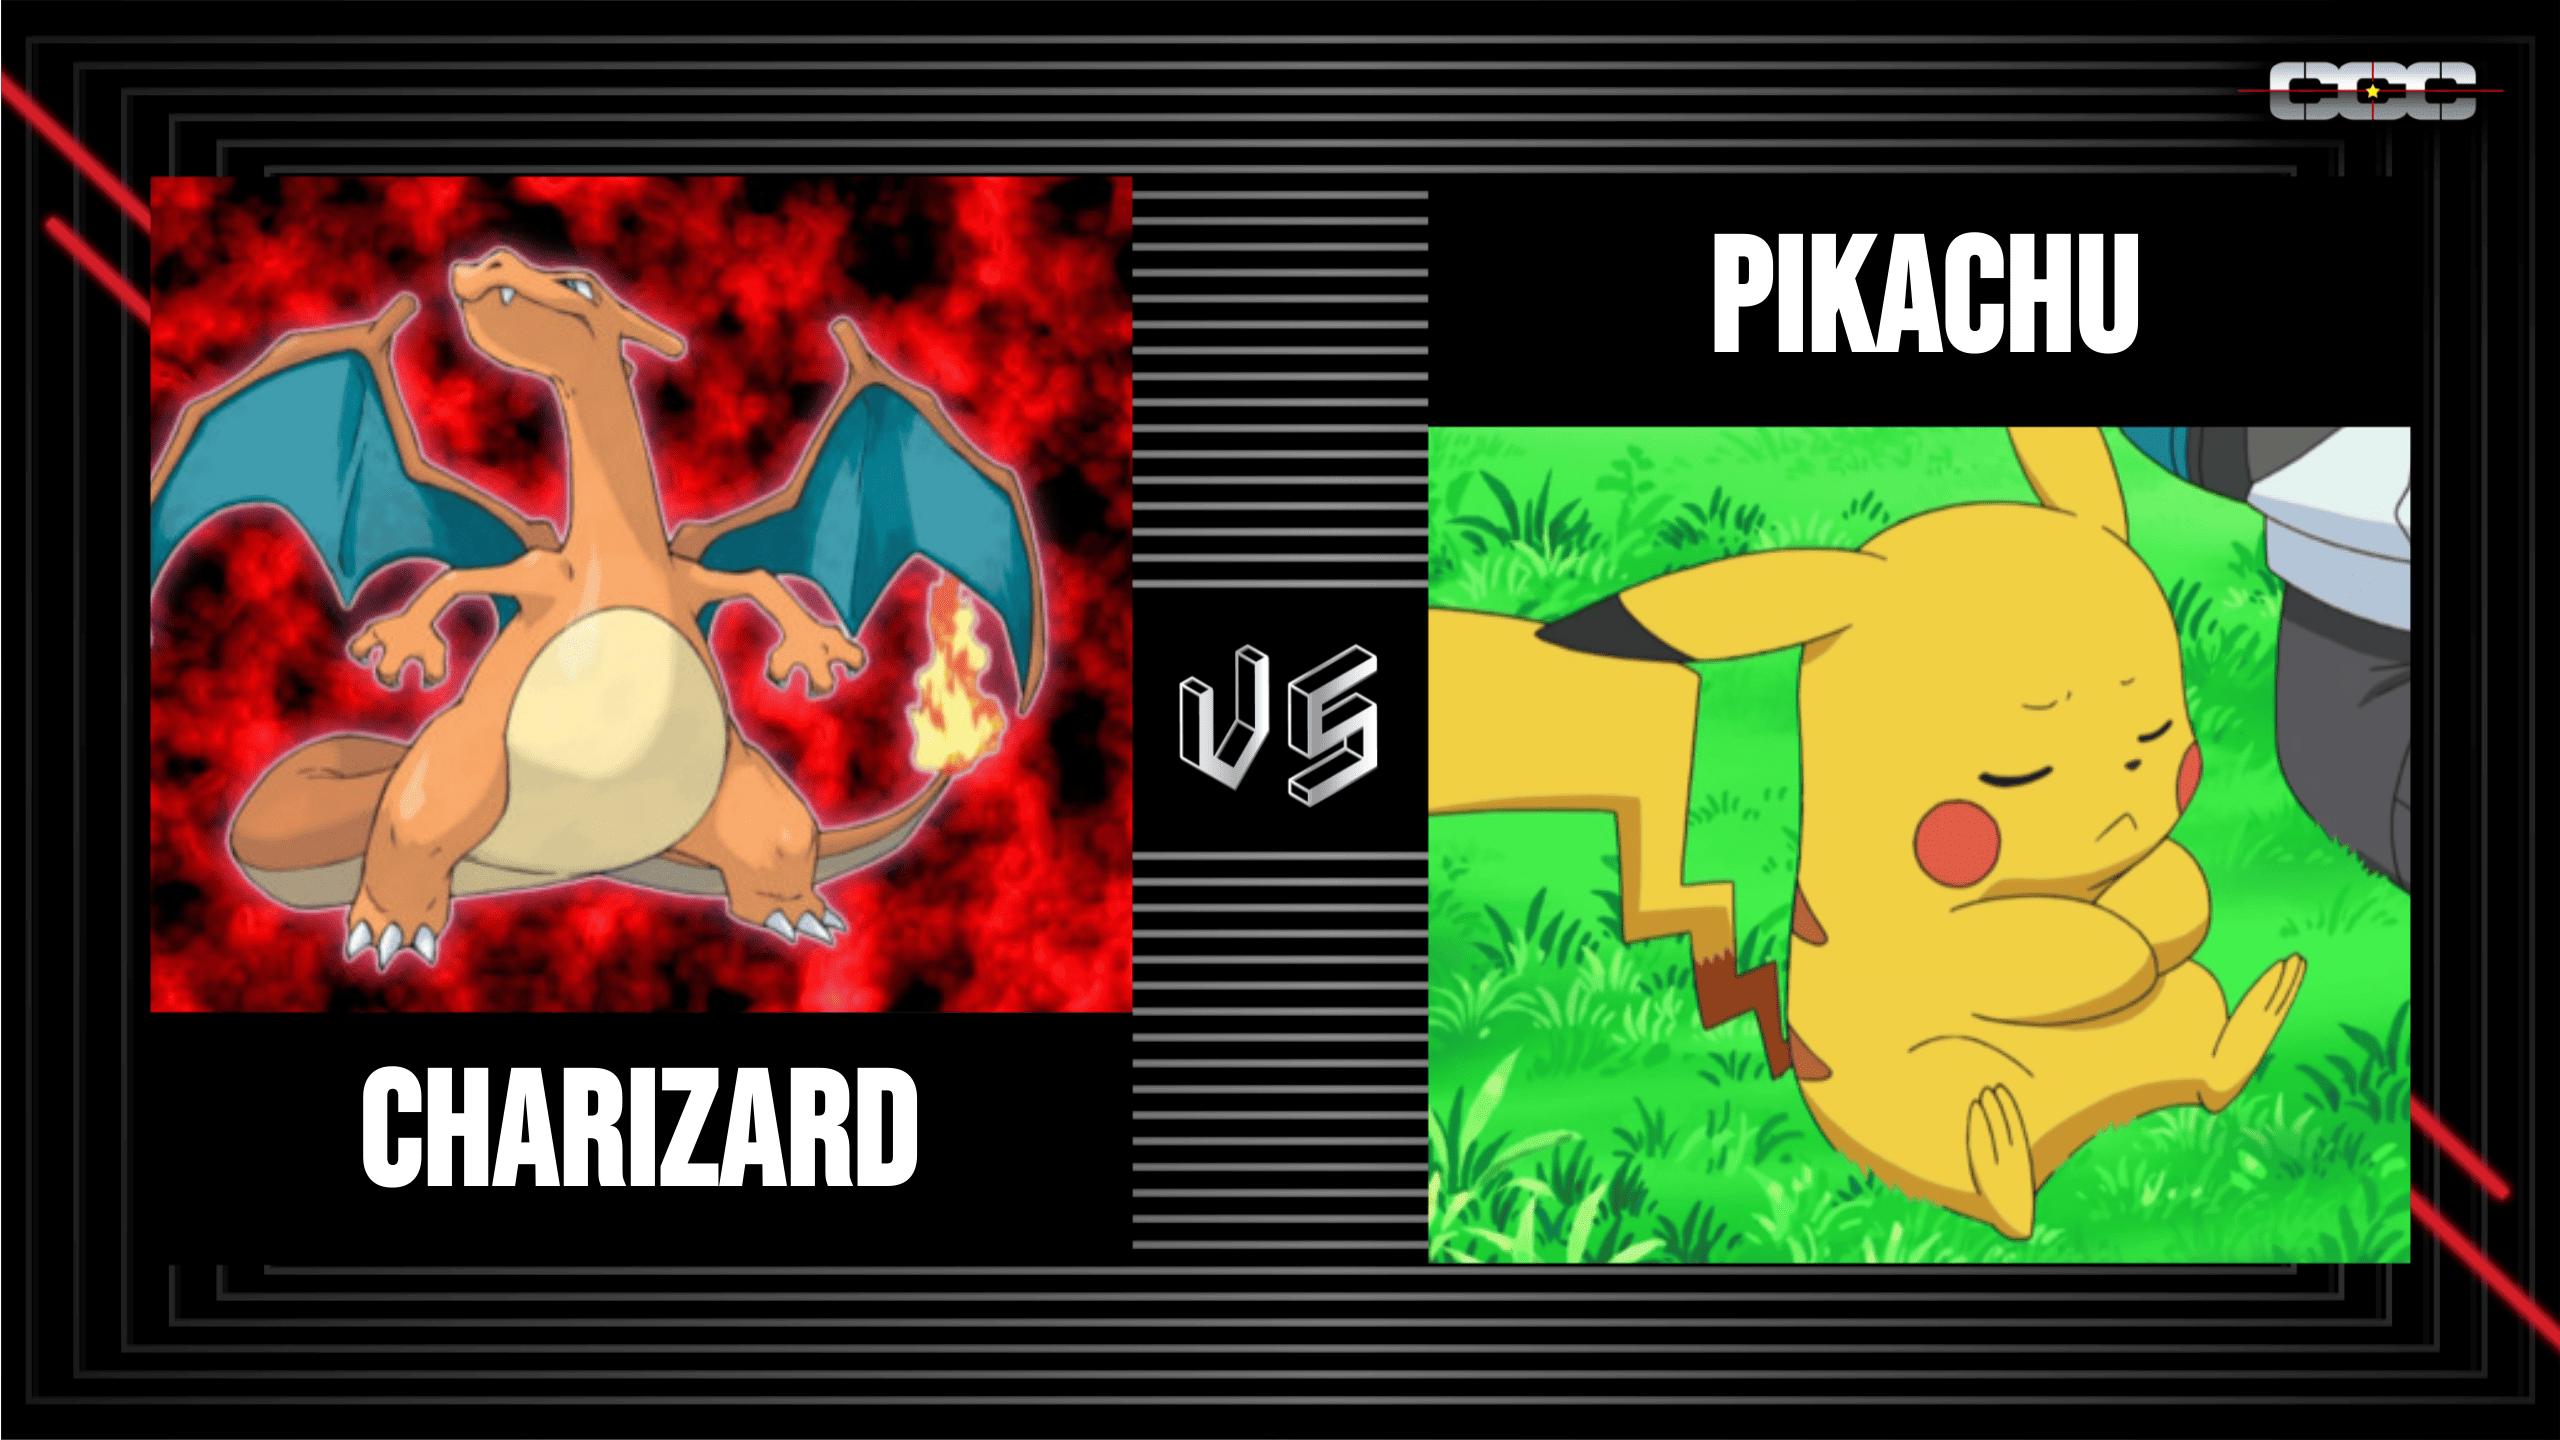 Charizard vs. Pikachu